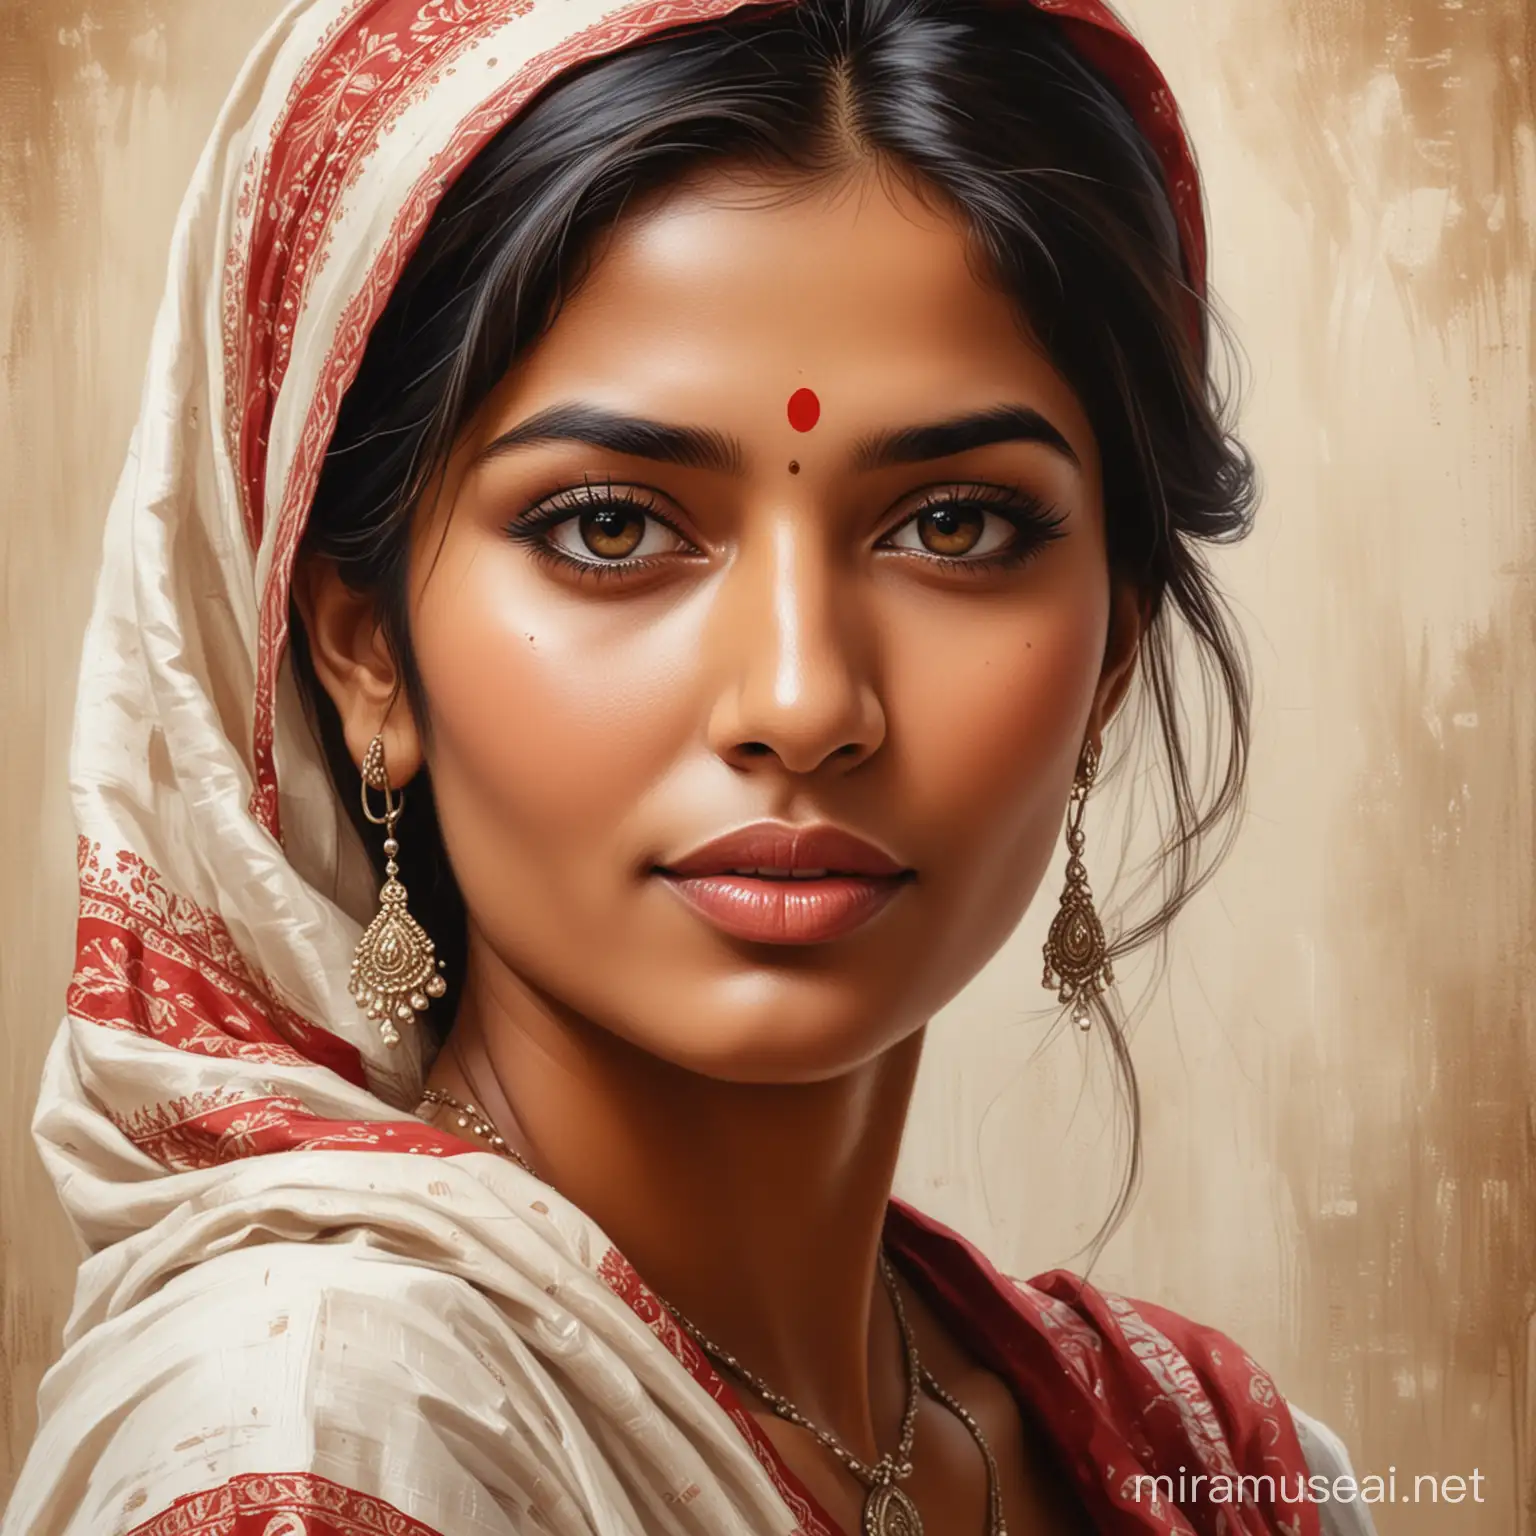 beautiful Indian woman portrait painting